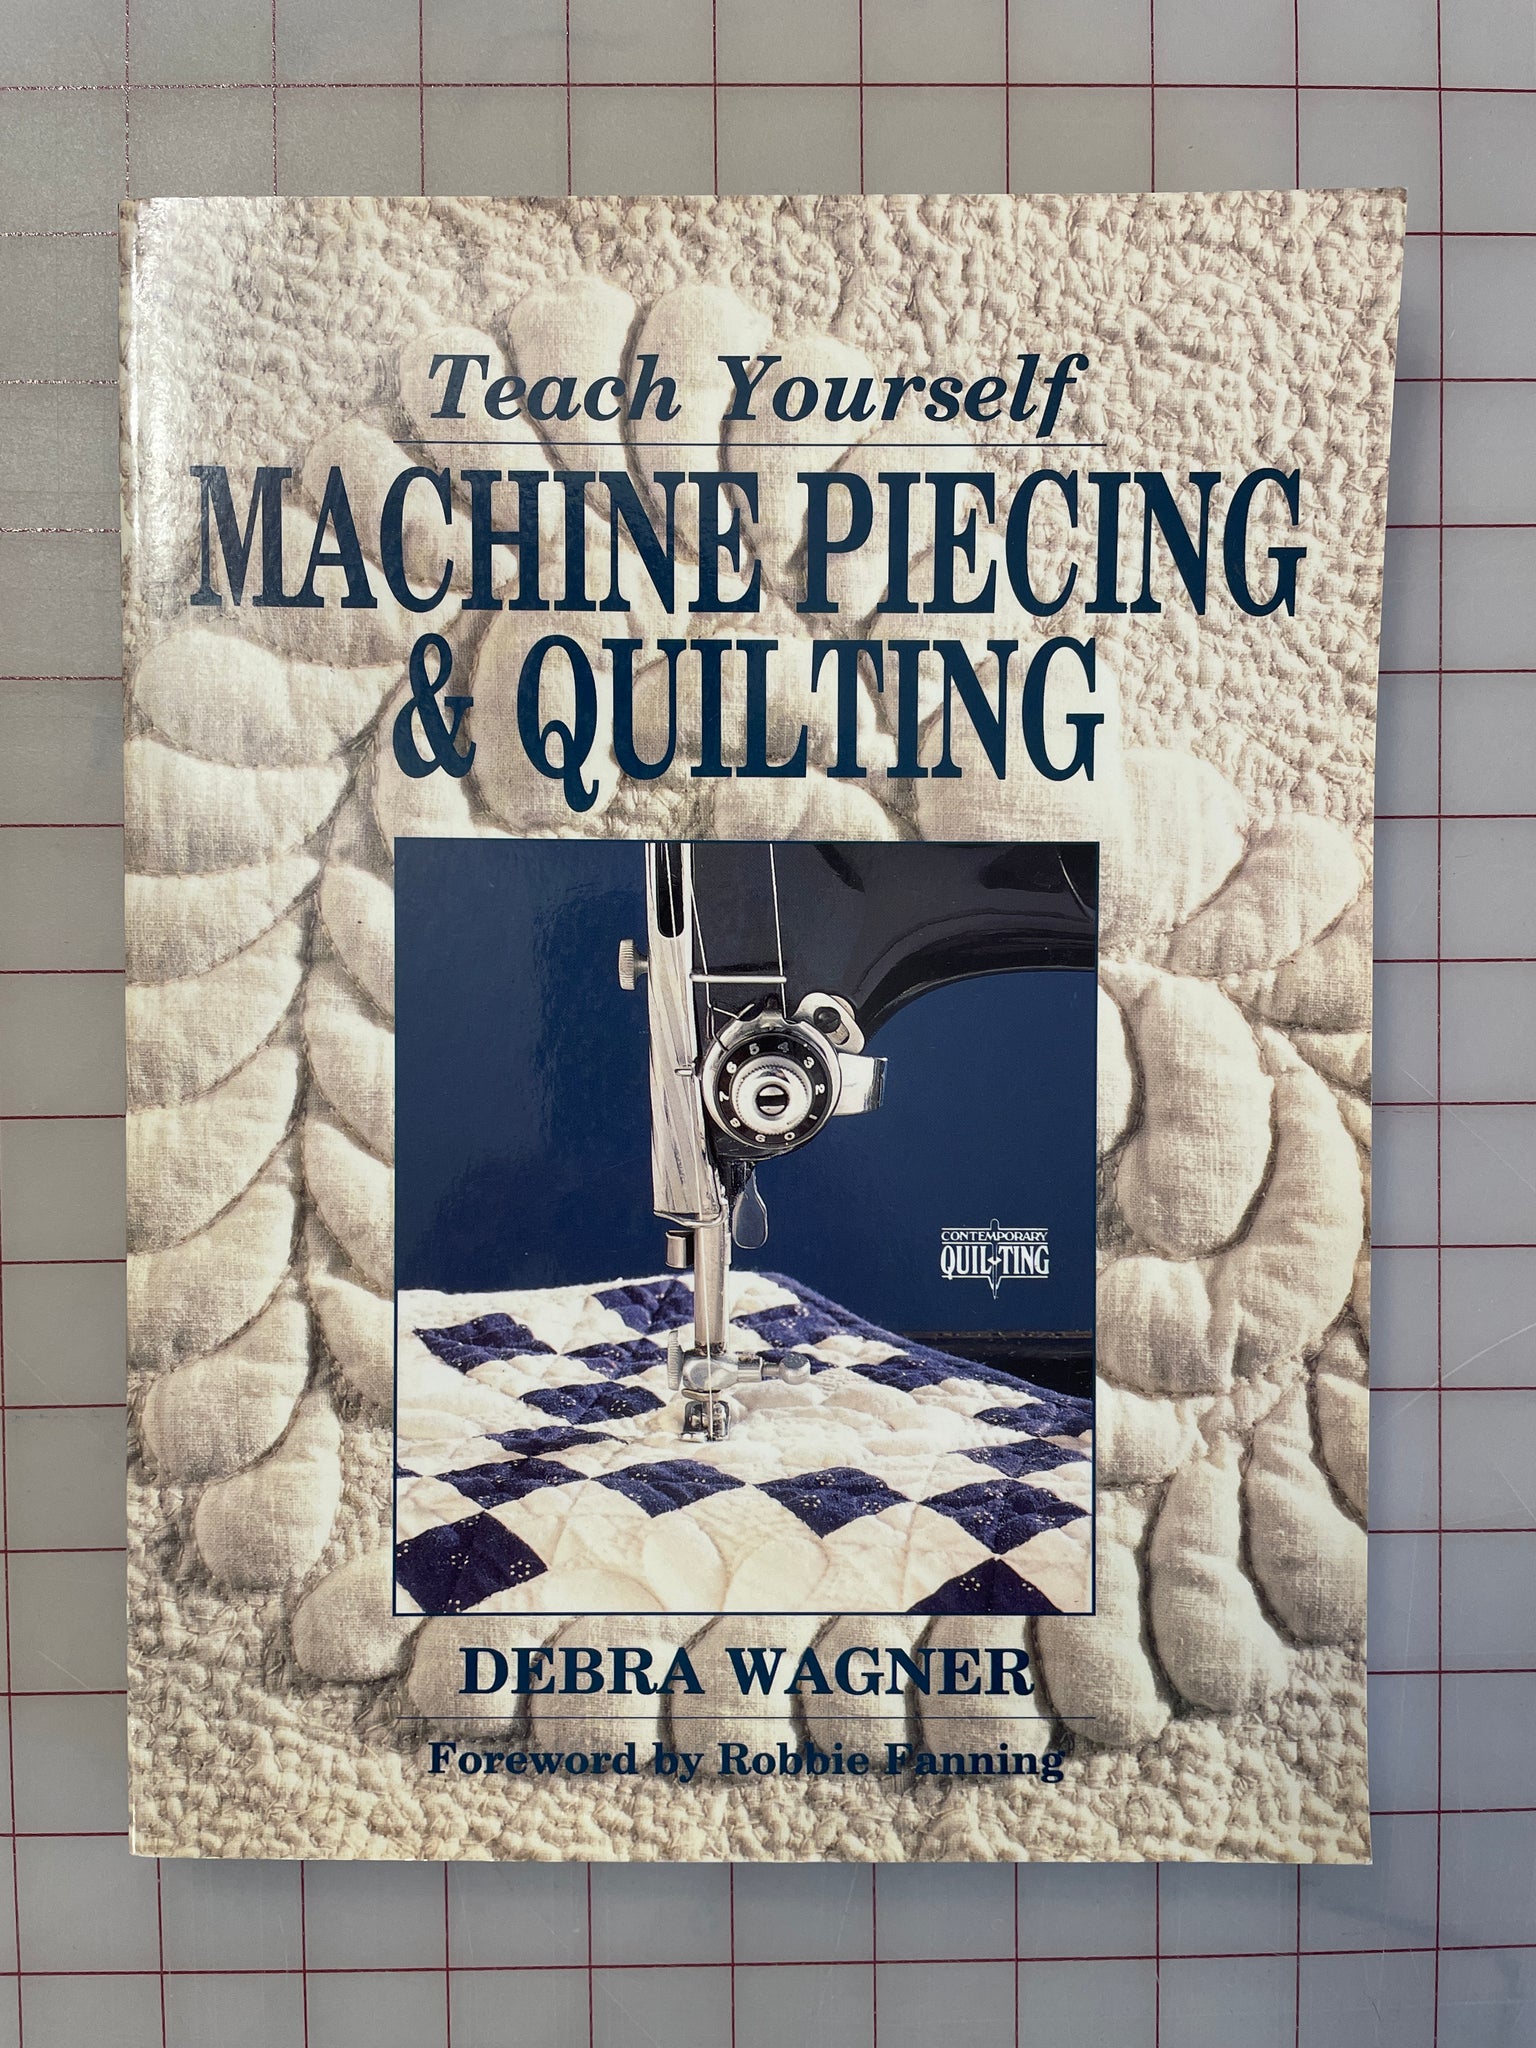 1992 Book - "Teach Yourself Machine Piecing & Quilting"